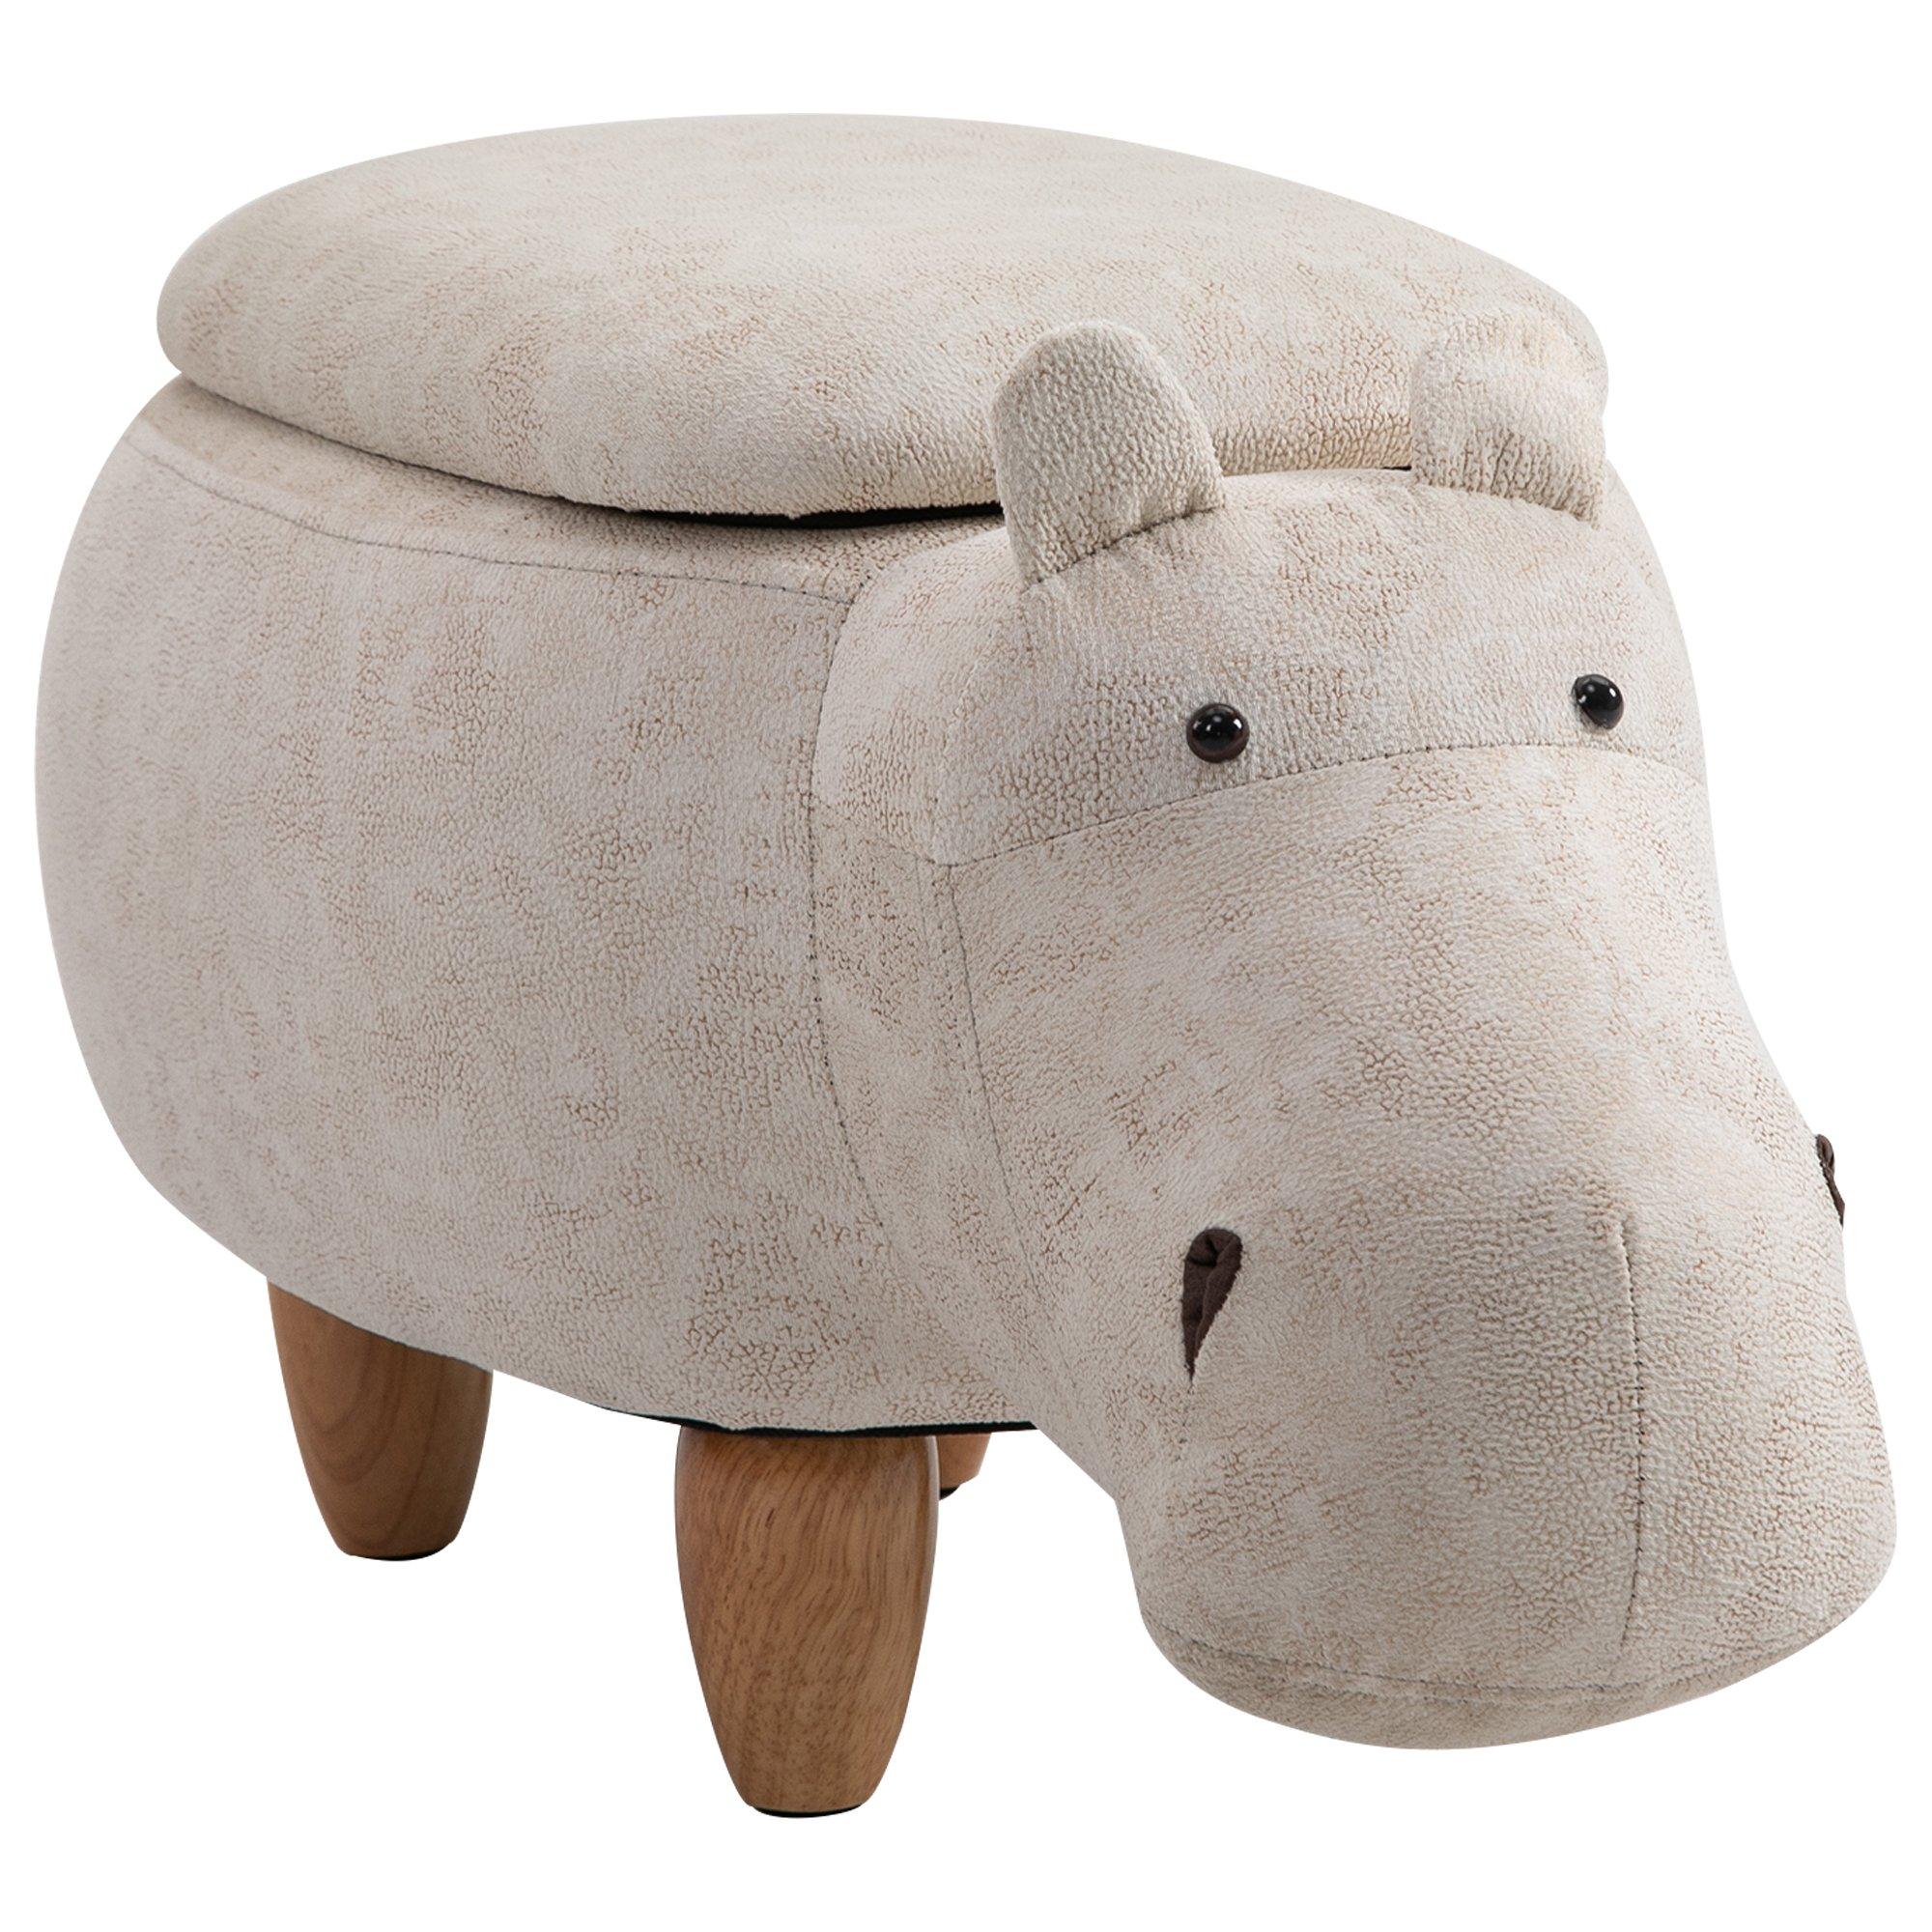 Hippo Storage Stool Cute Kids Decoration Footrest Wood Frame Legs